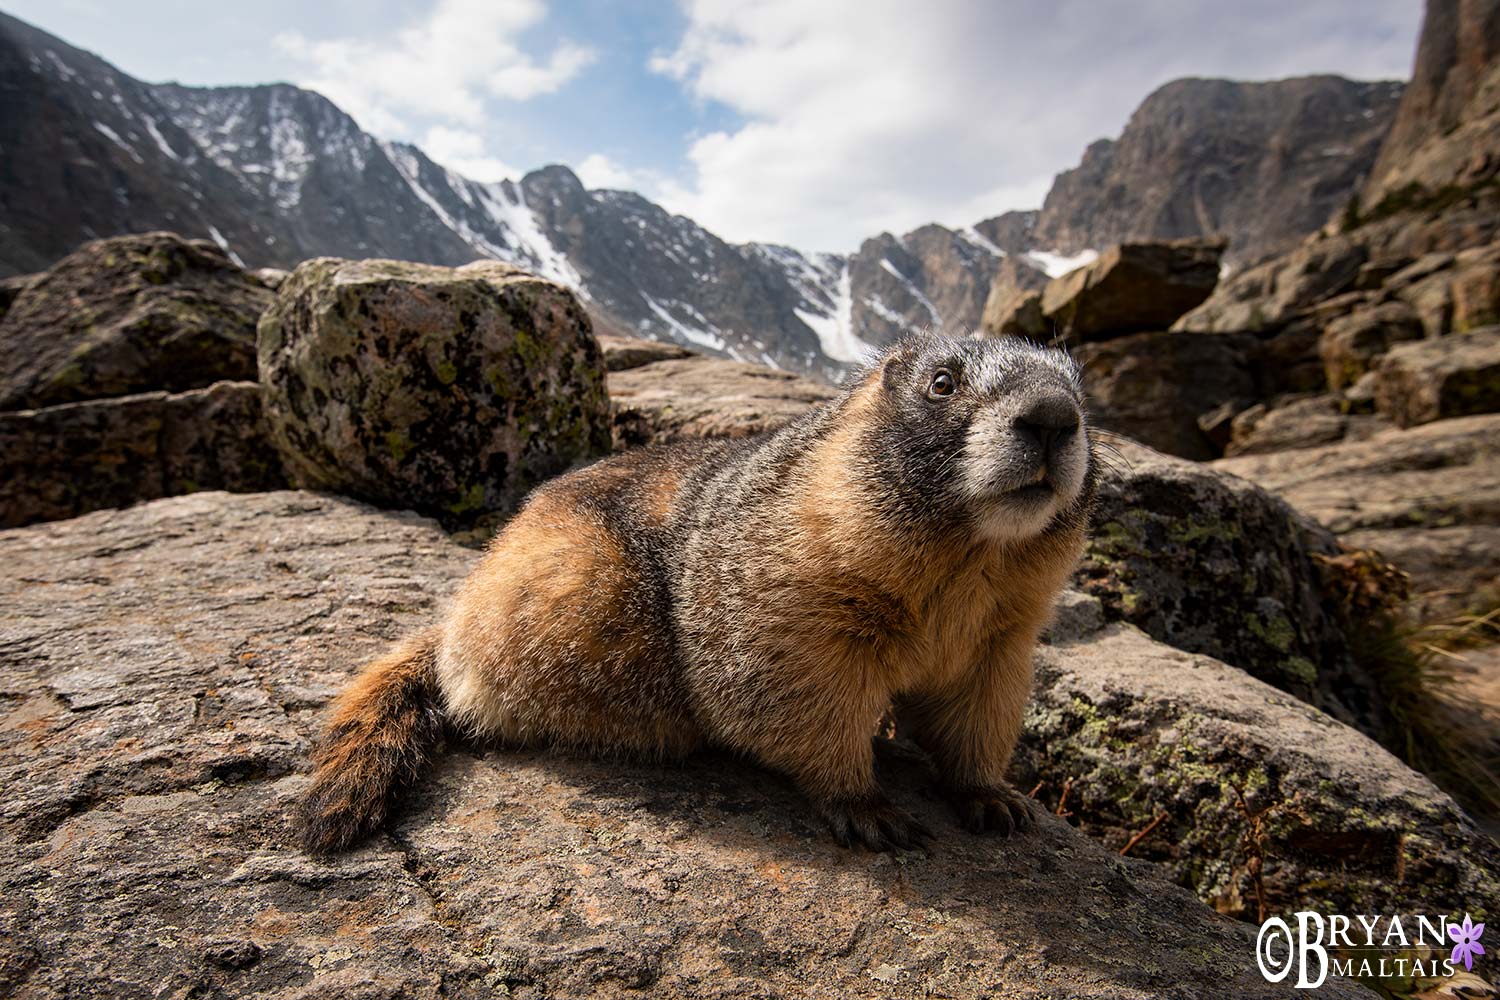 Yelloe-belly marmot rocky mountain national park colorado wildlife photos